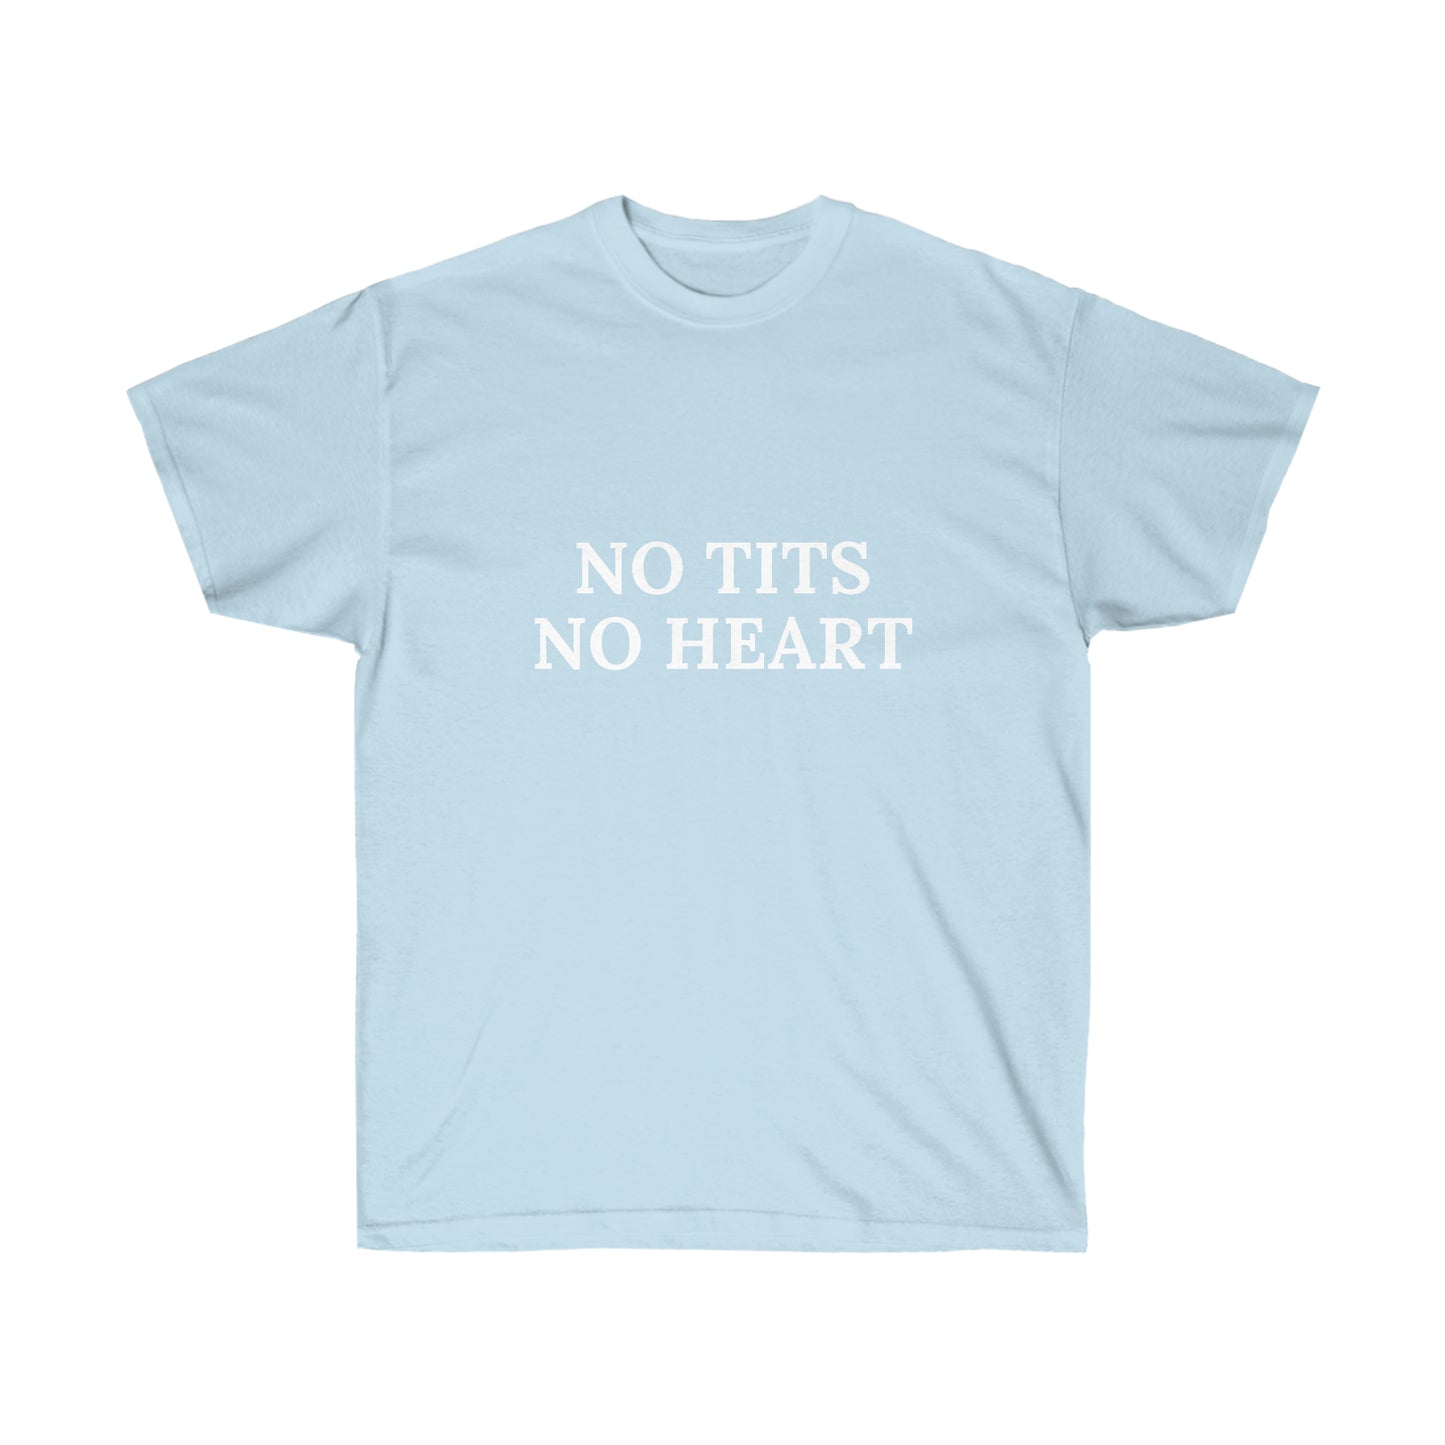 No tits no heart | Tee